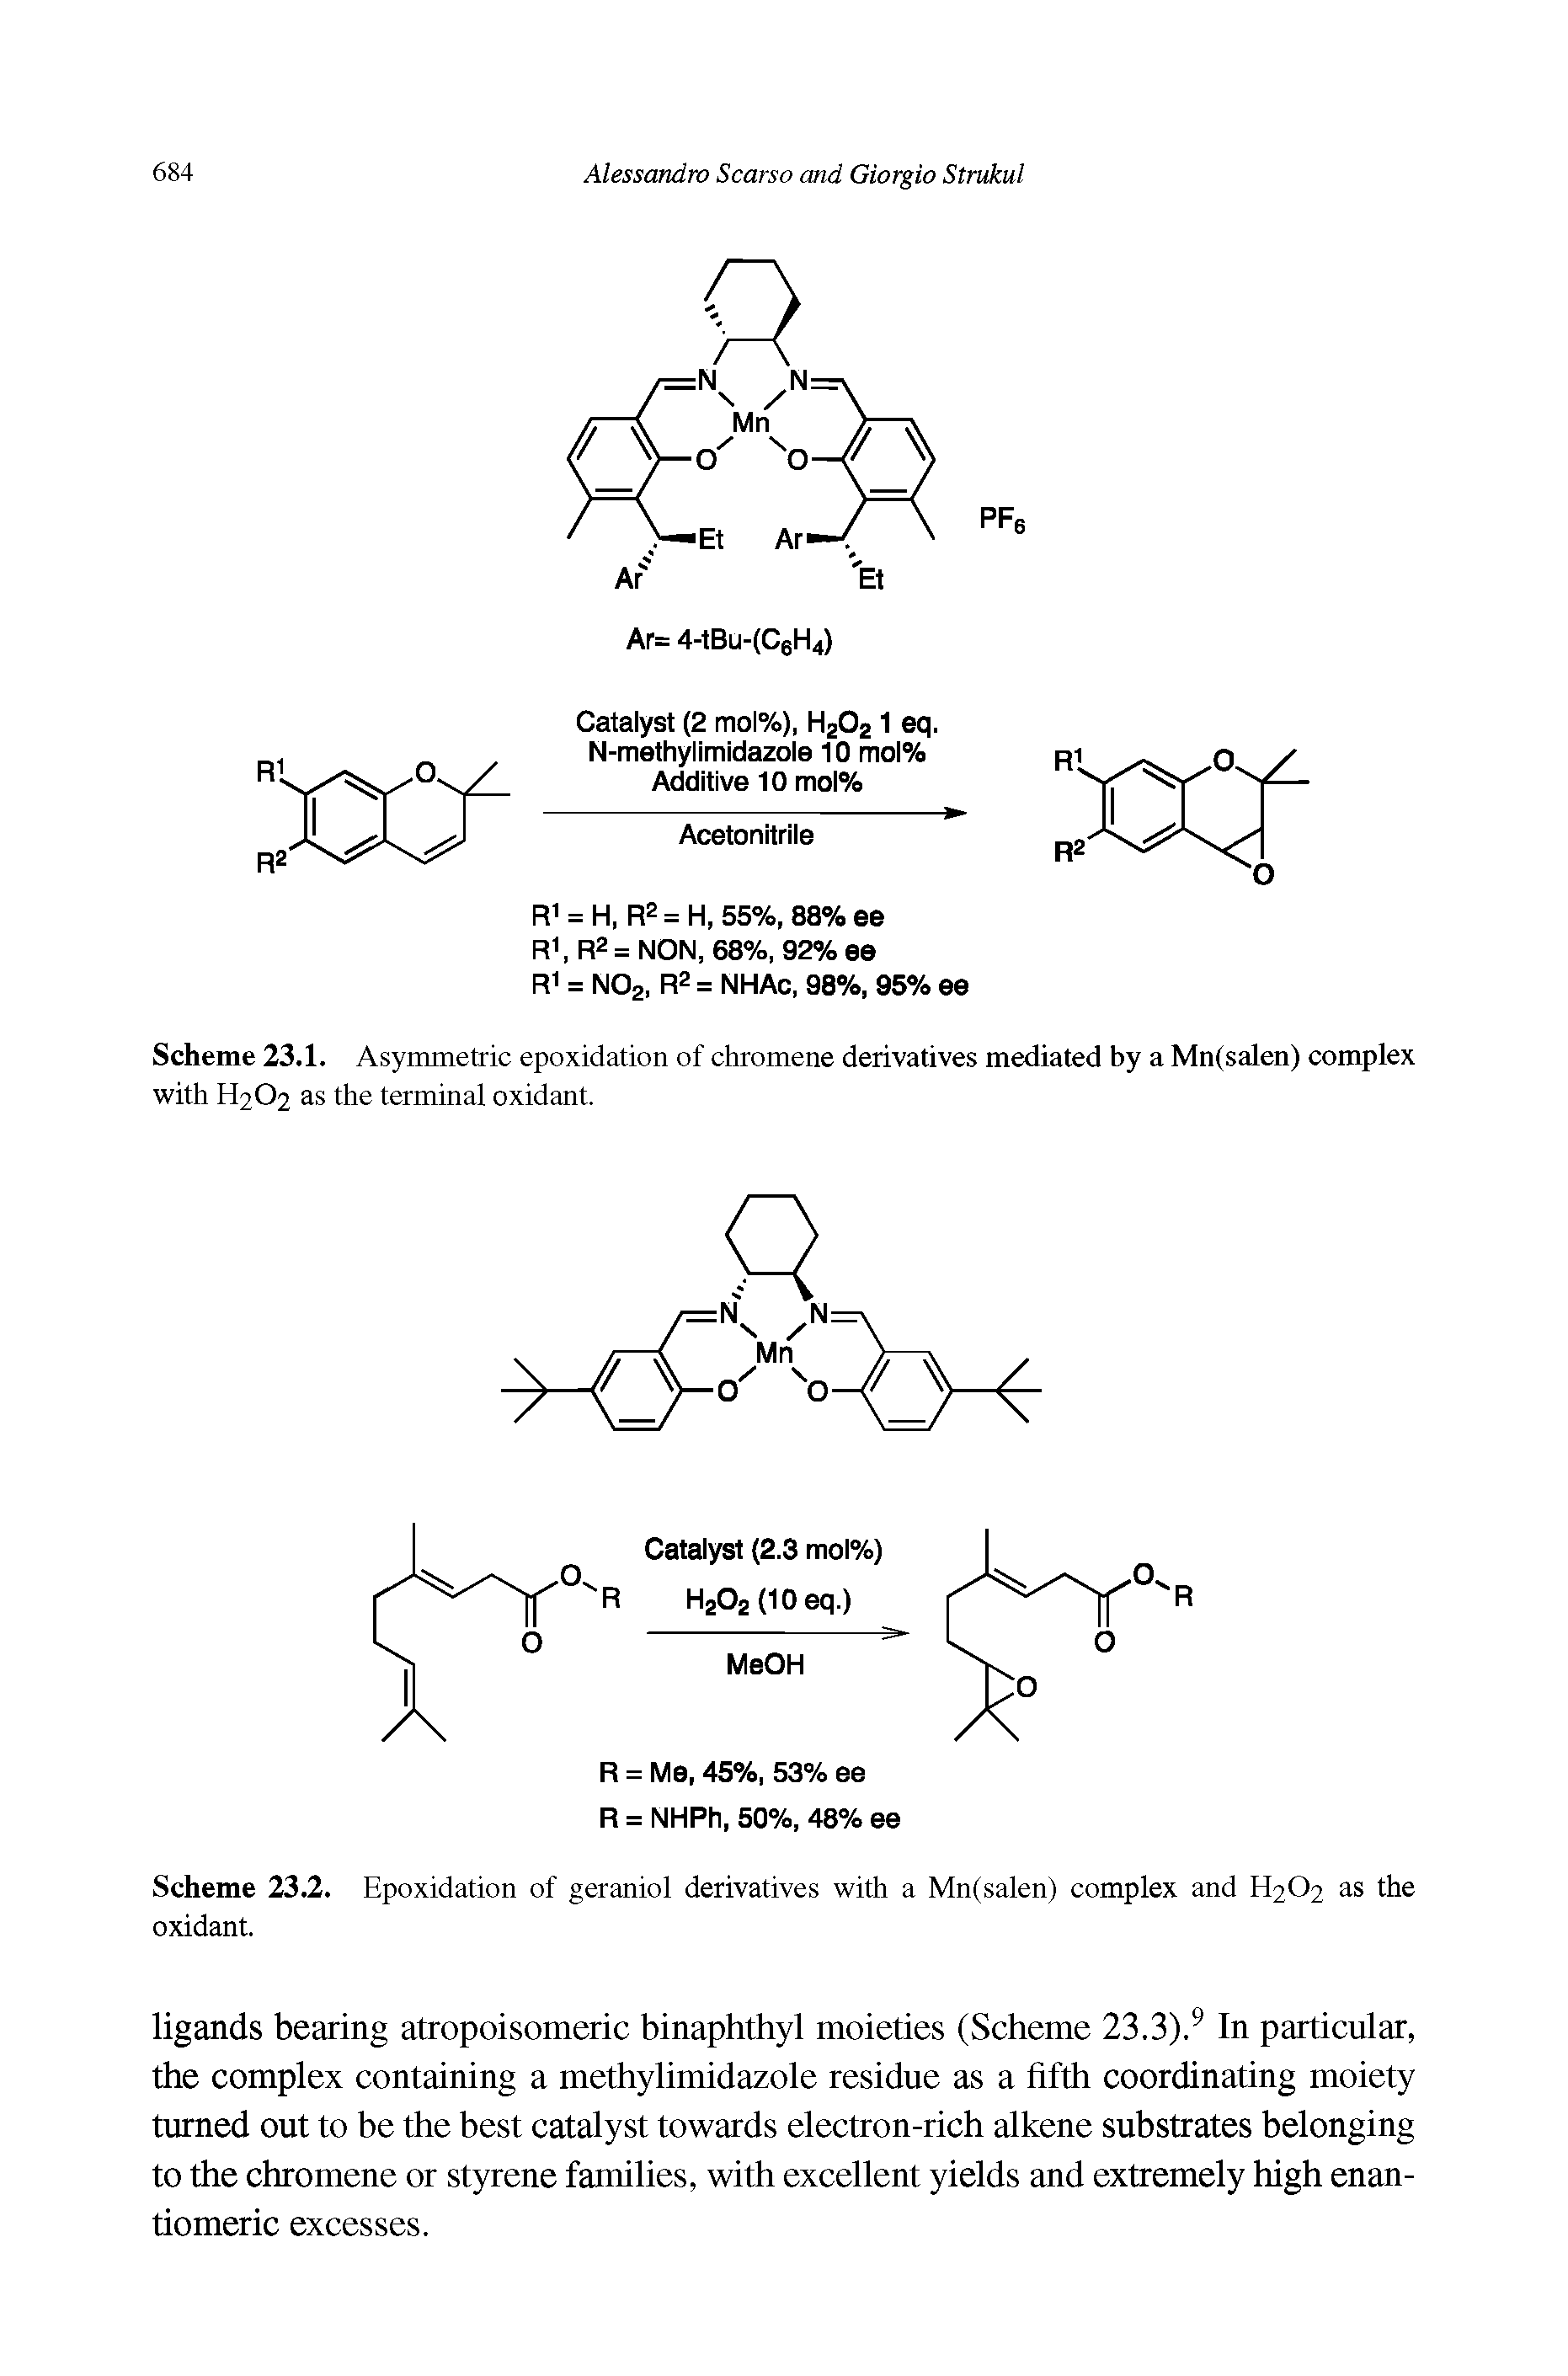 Scheme 23.1. Asymmetric epoxidation of chromene derivatives mediated by a Mn(salen) complex...